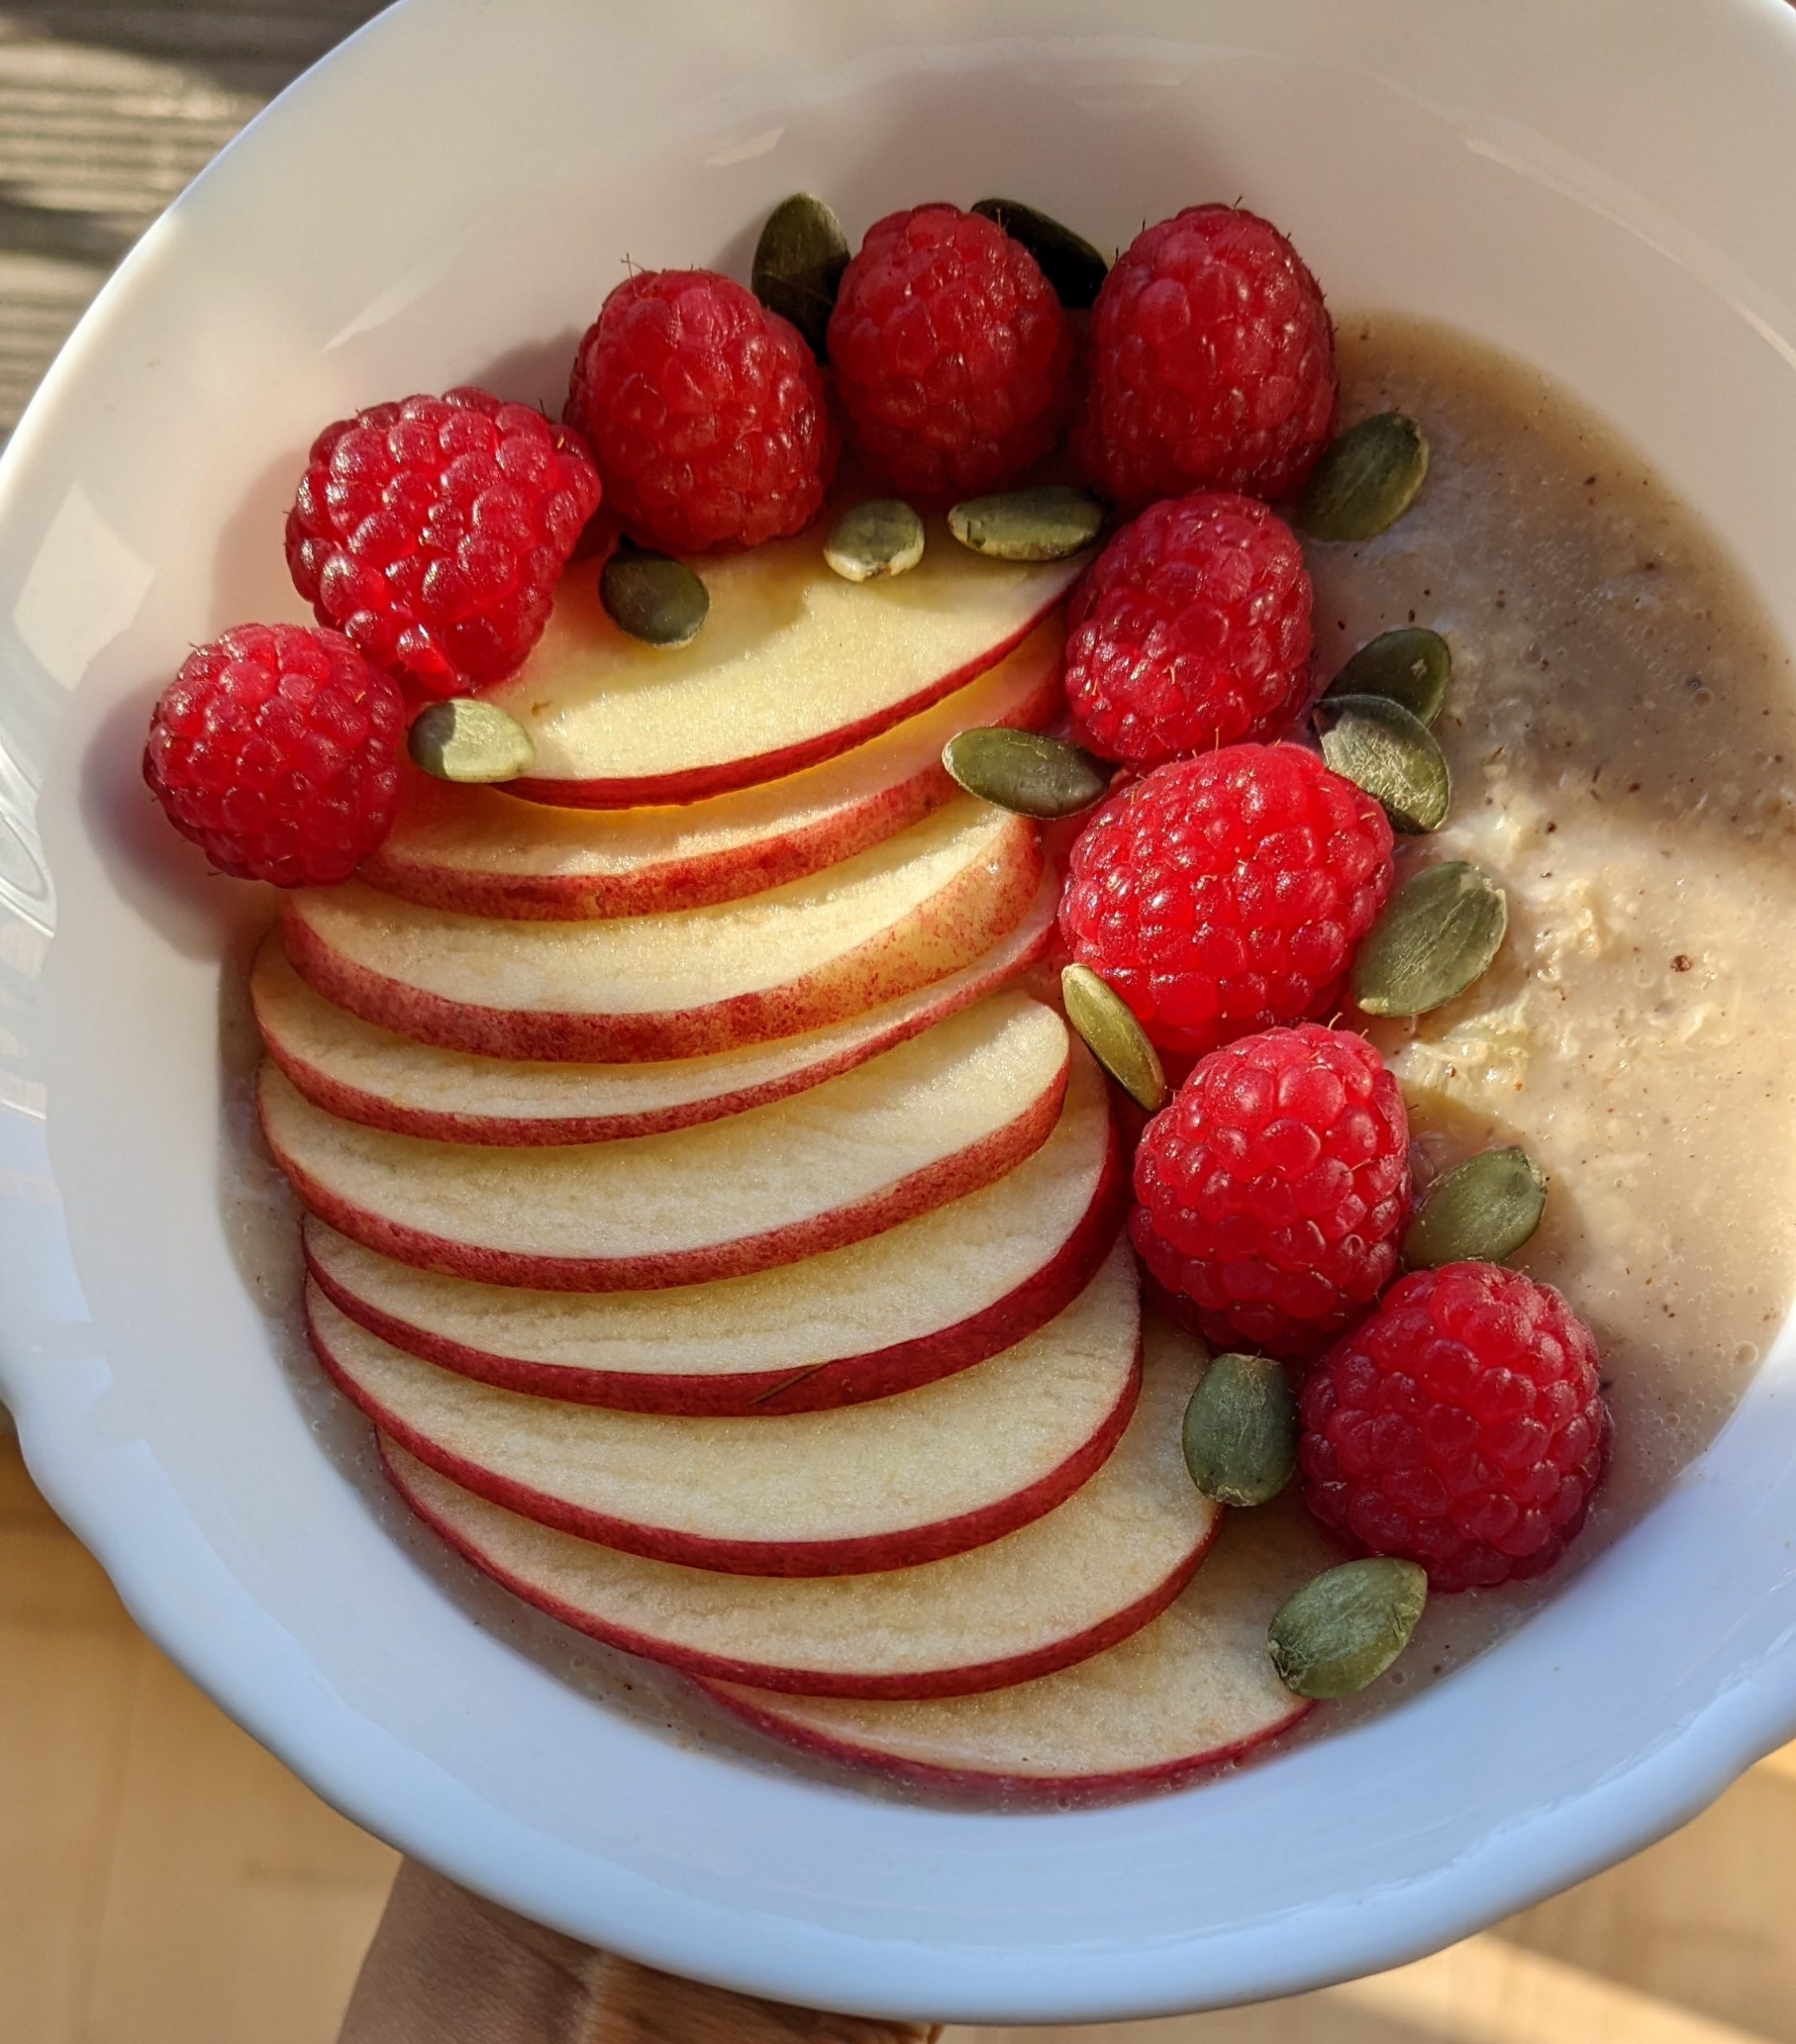 easy-oatmeal-bowls-oats-breakfast-banana-cinnamon-oatmeal-with-apple-raspberries-pumpkin-seeds-vegan-food-uk-vegetarian-easy-recipes